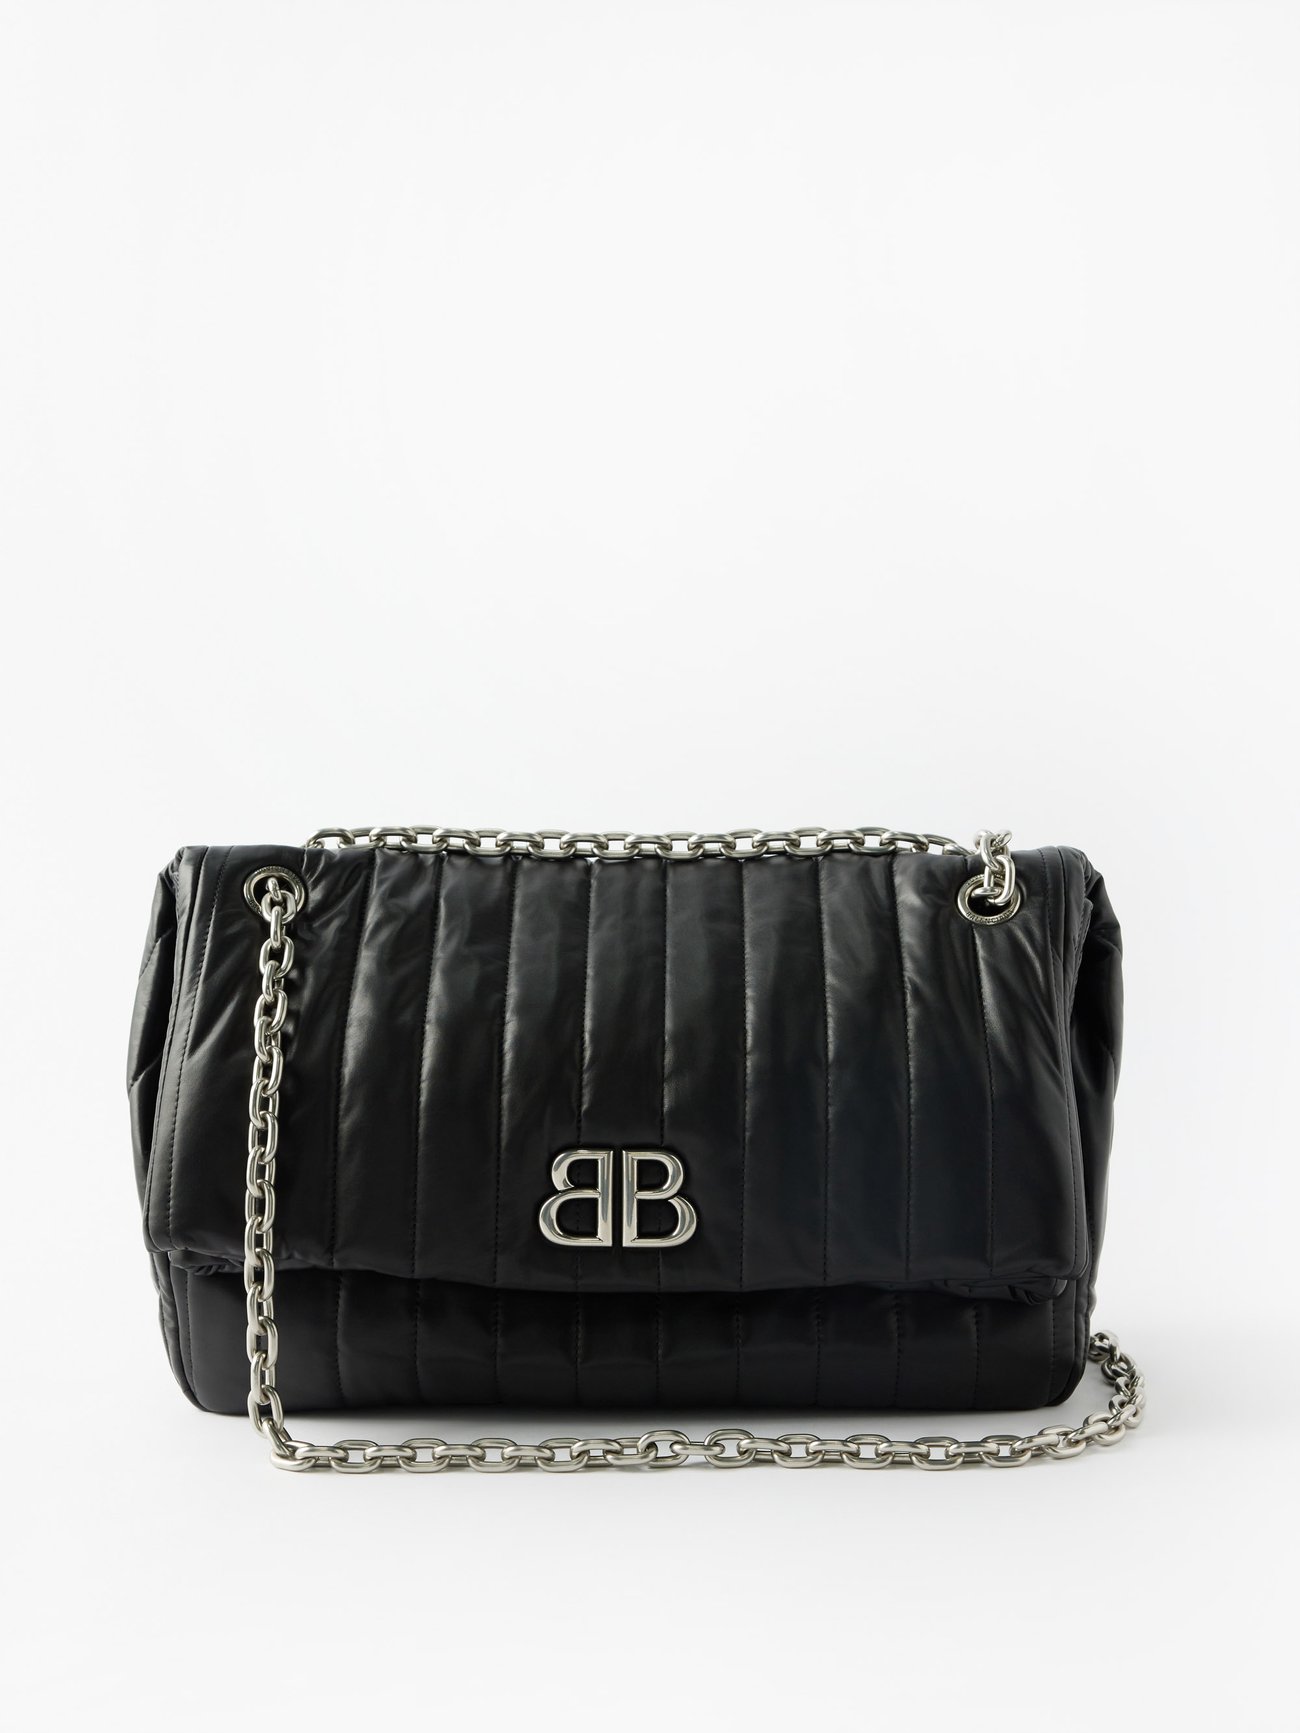 Balenciaga Bb Quilted Crossbody Bag in Black